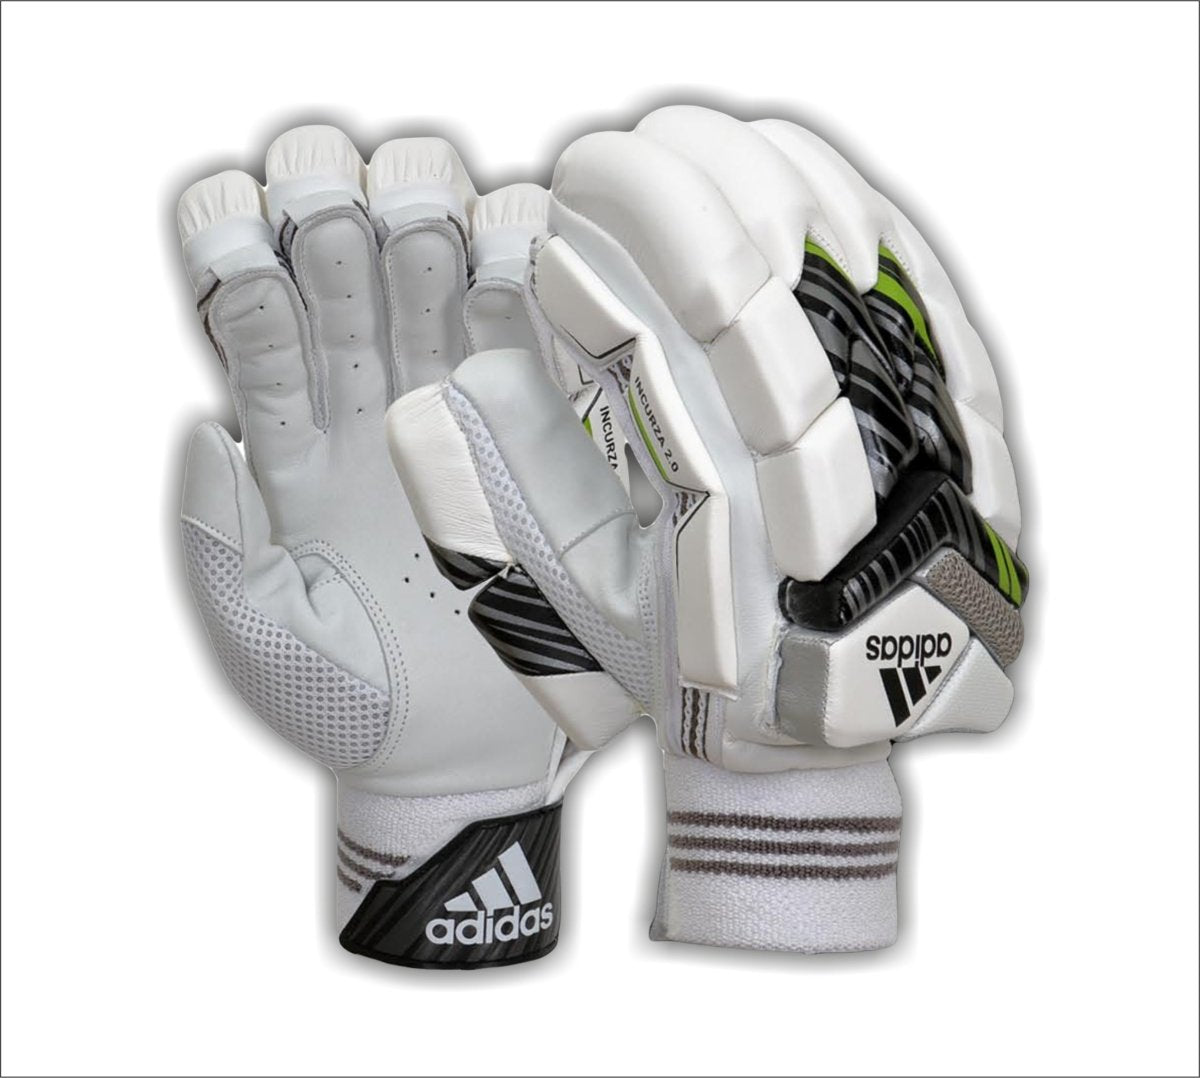 Adidas Incurza 2.0 Cricket Batting Gloves